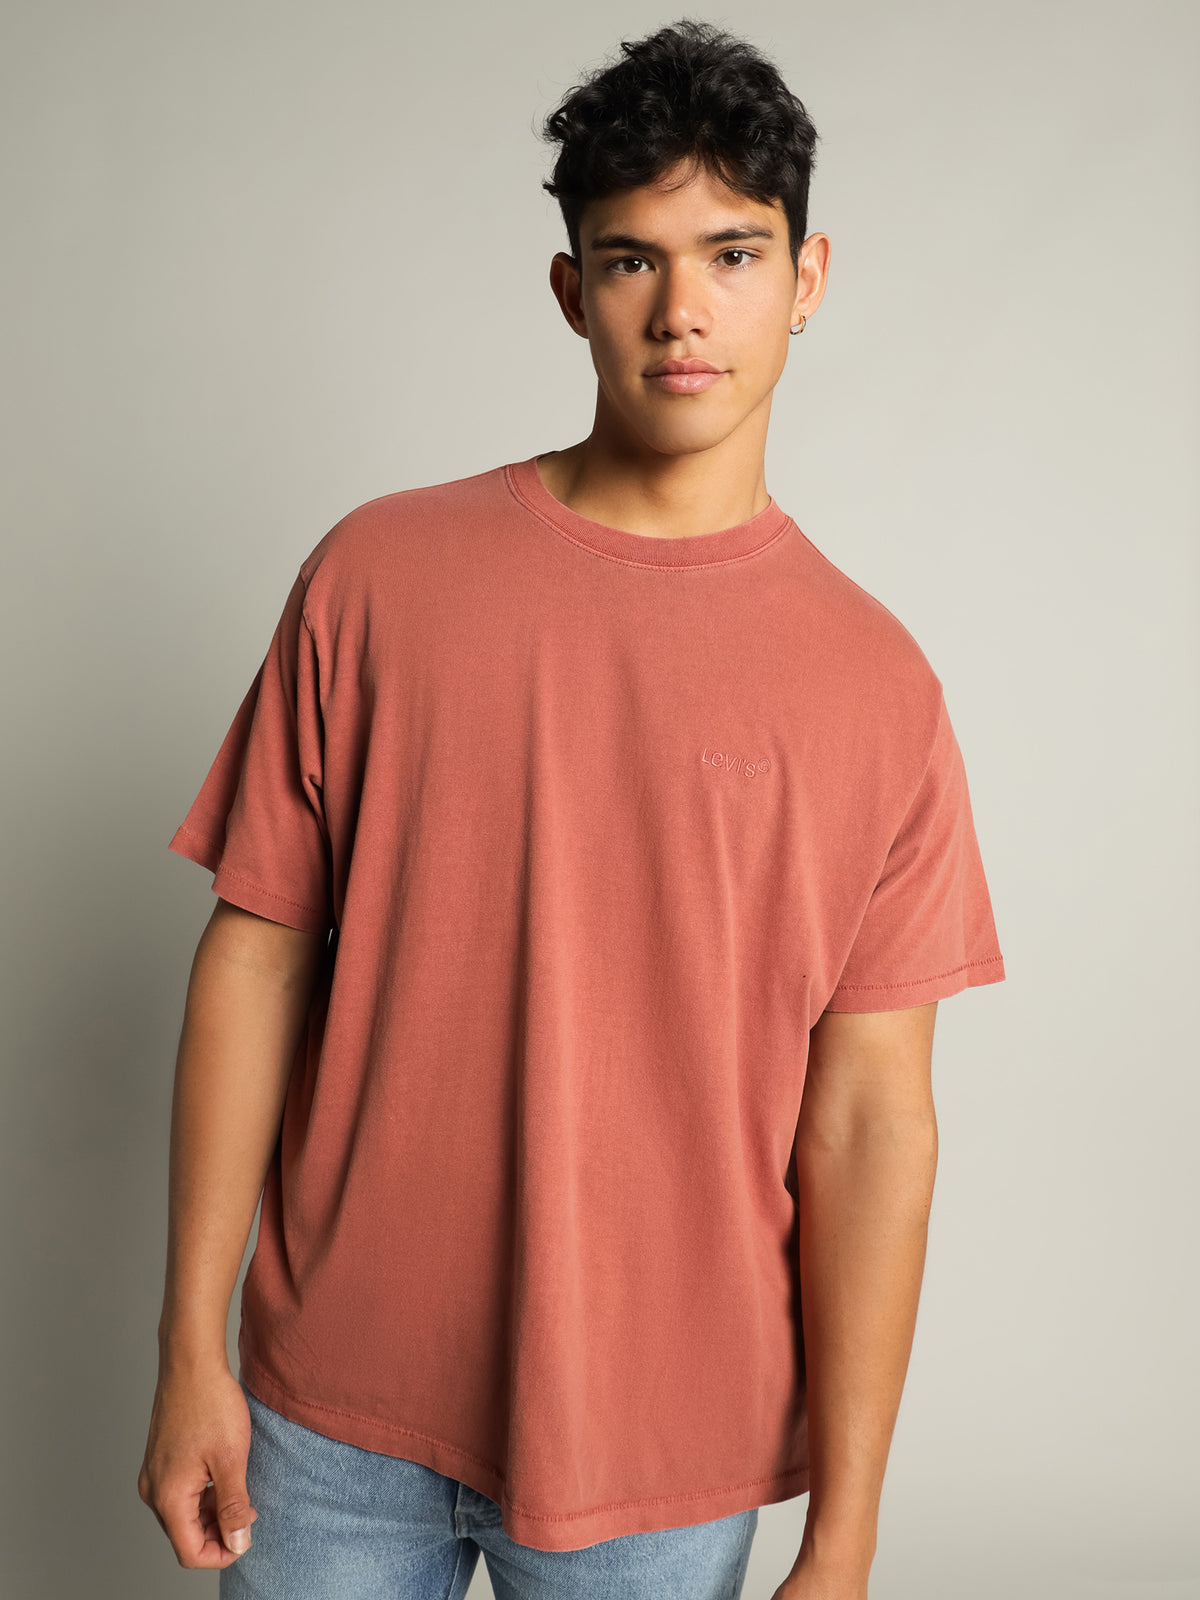 Vintage Fit T-Shirt in Pink